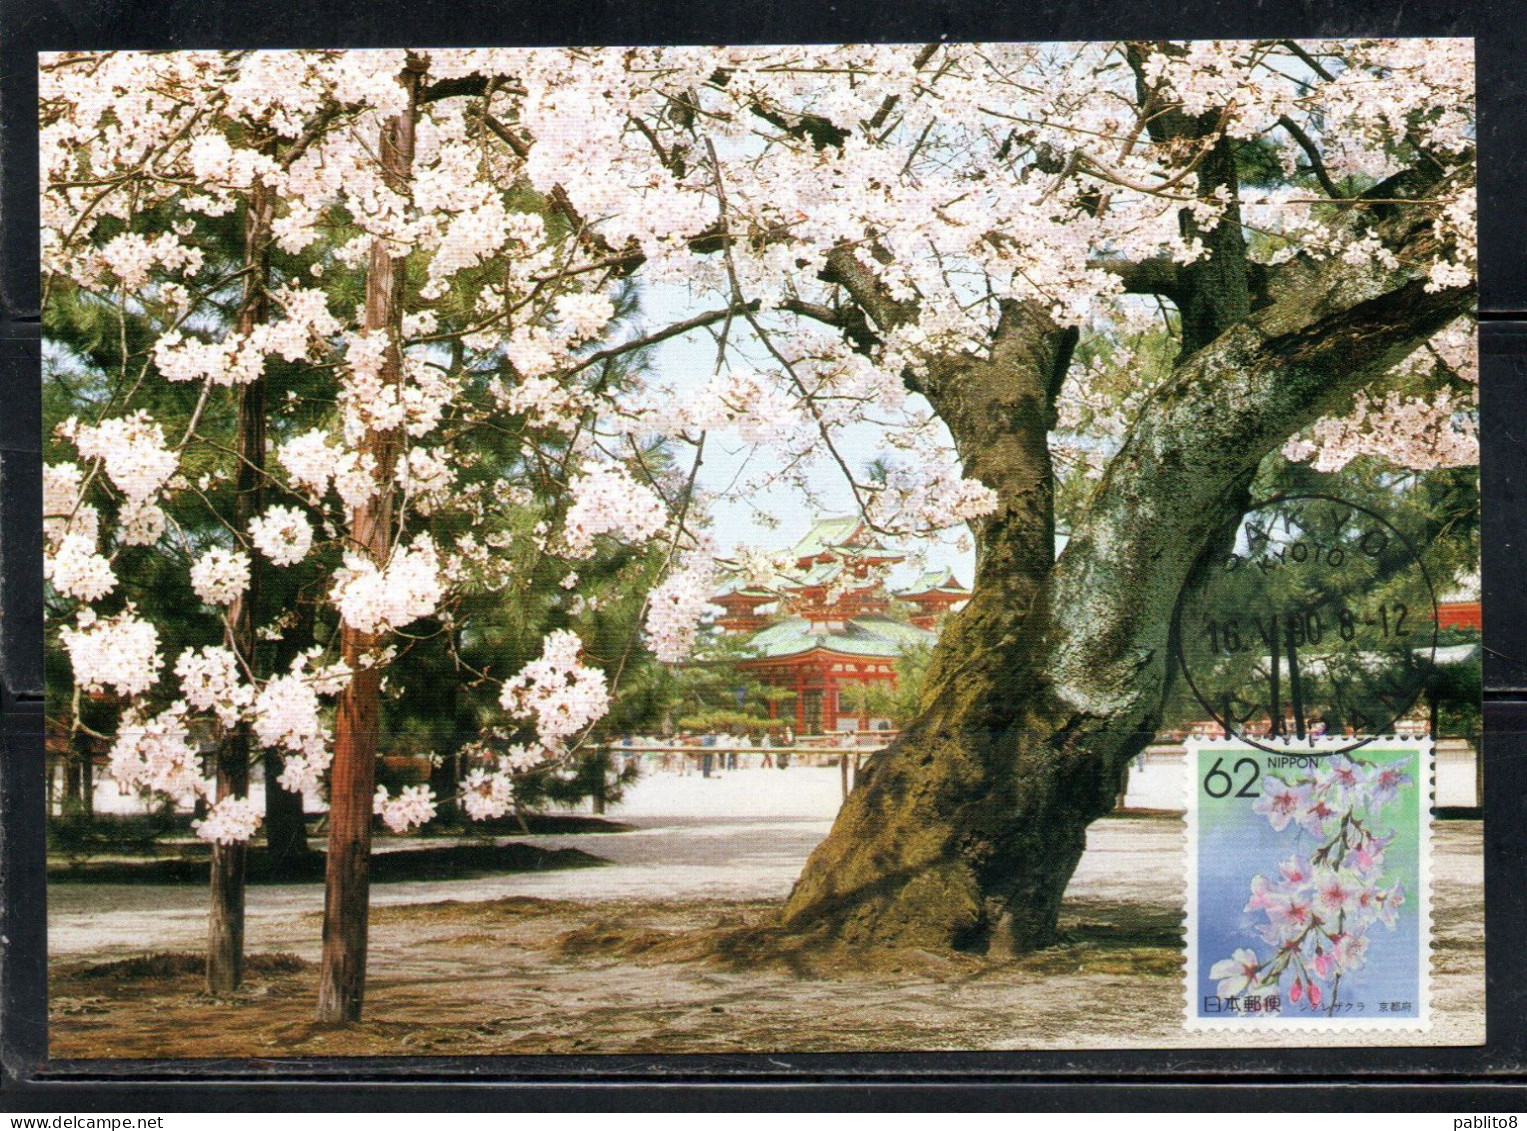 JAPAN GIAPPONE 1990 FLORA FLOWERS PREFECTURE FLOWER 62y MAXI MAXIMUM CARD - Maximum Cards